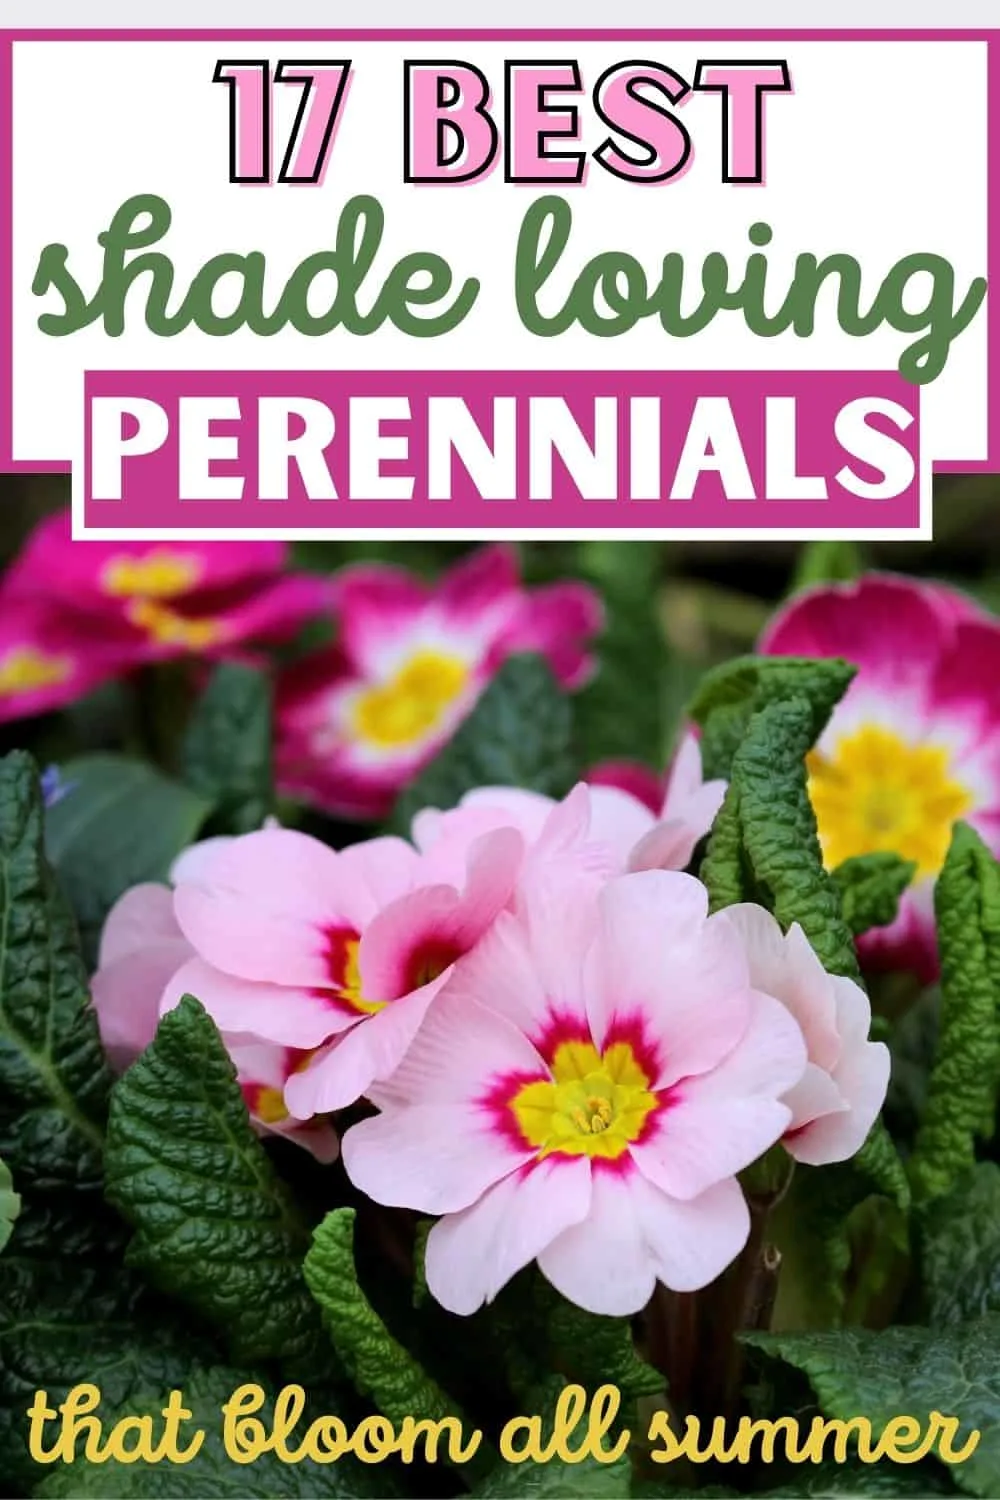 17 Best shade loving perennials that bloom all summer.